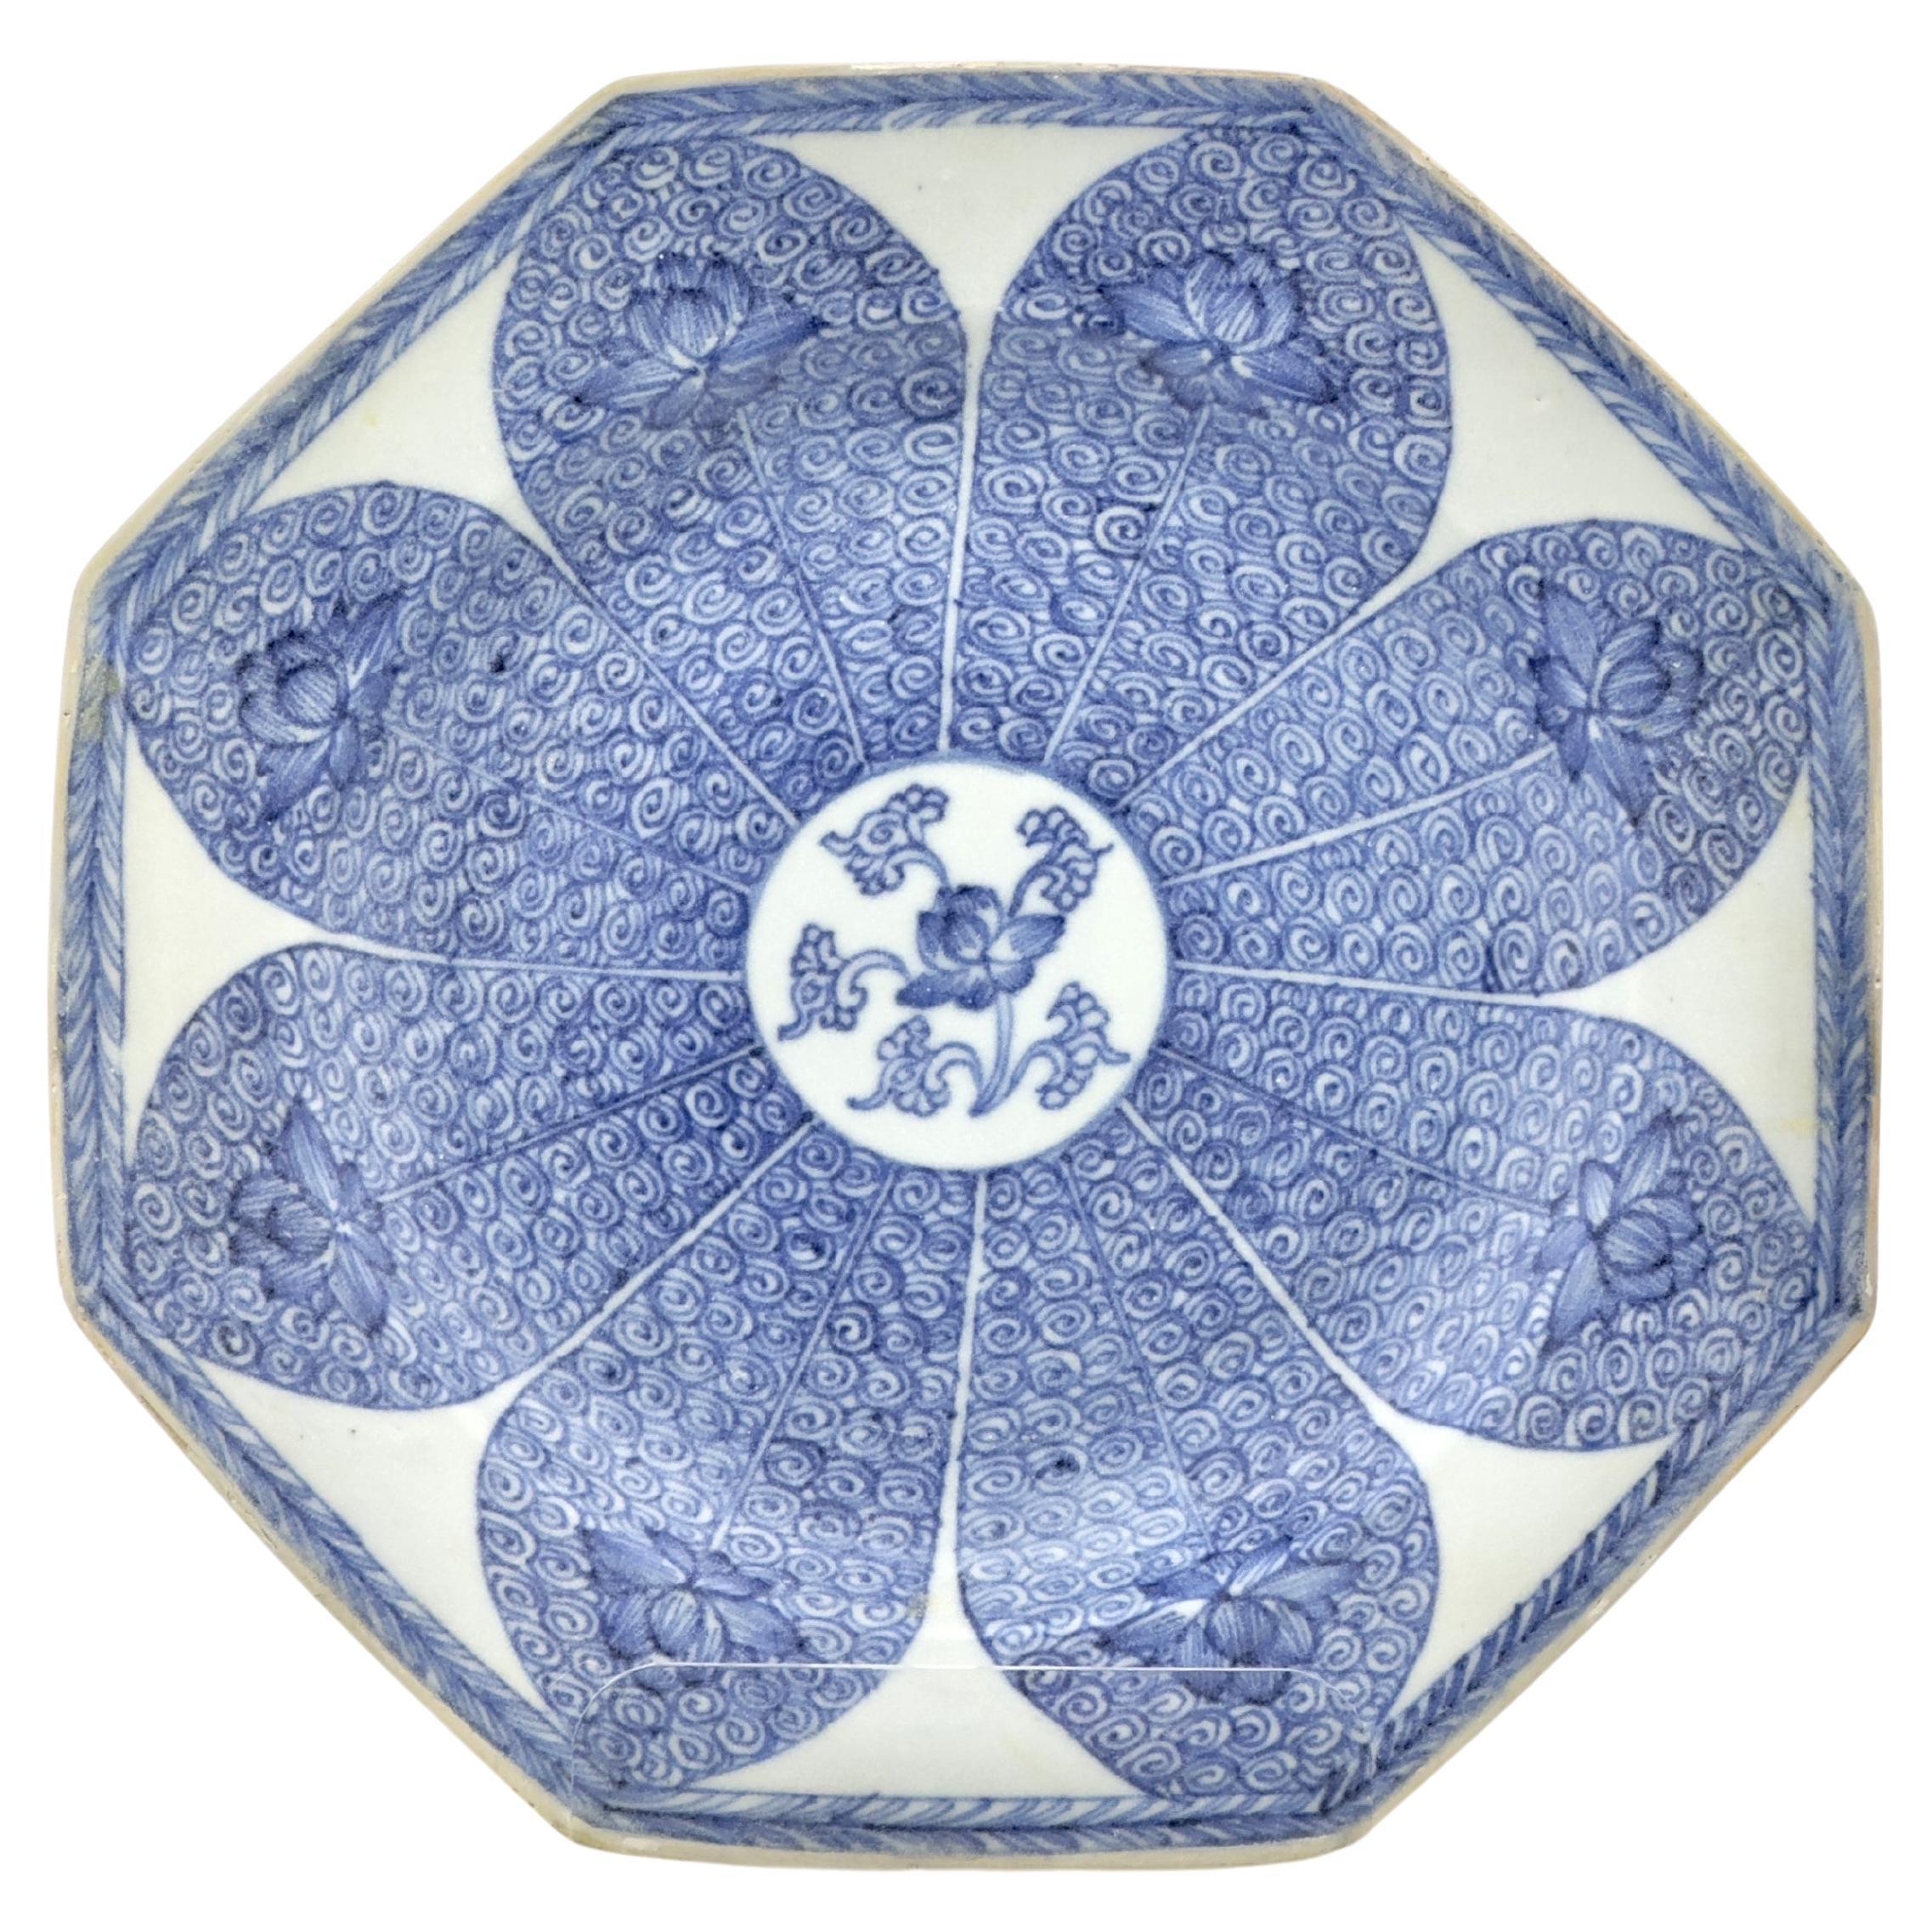 'Lotus' Pattern Blue and White Dish c. 1725, Qing Dynasty, Yongzheng Era